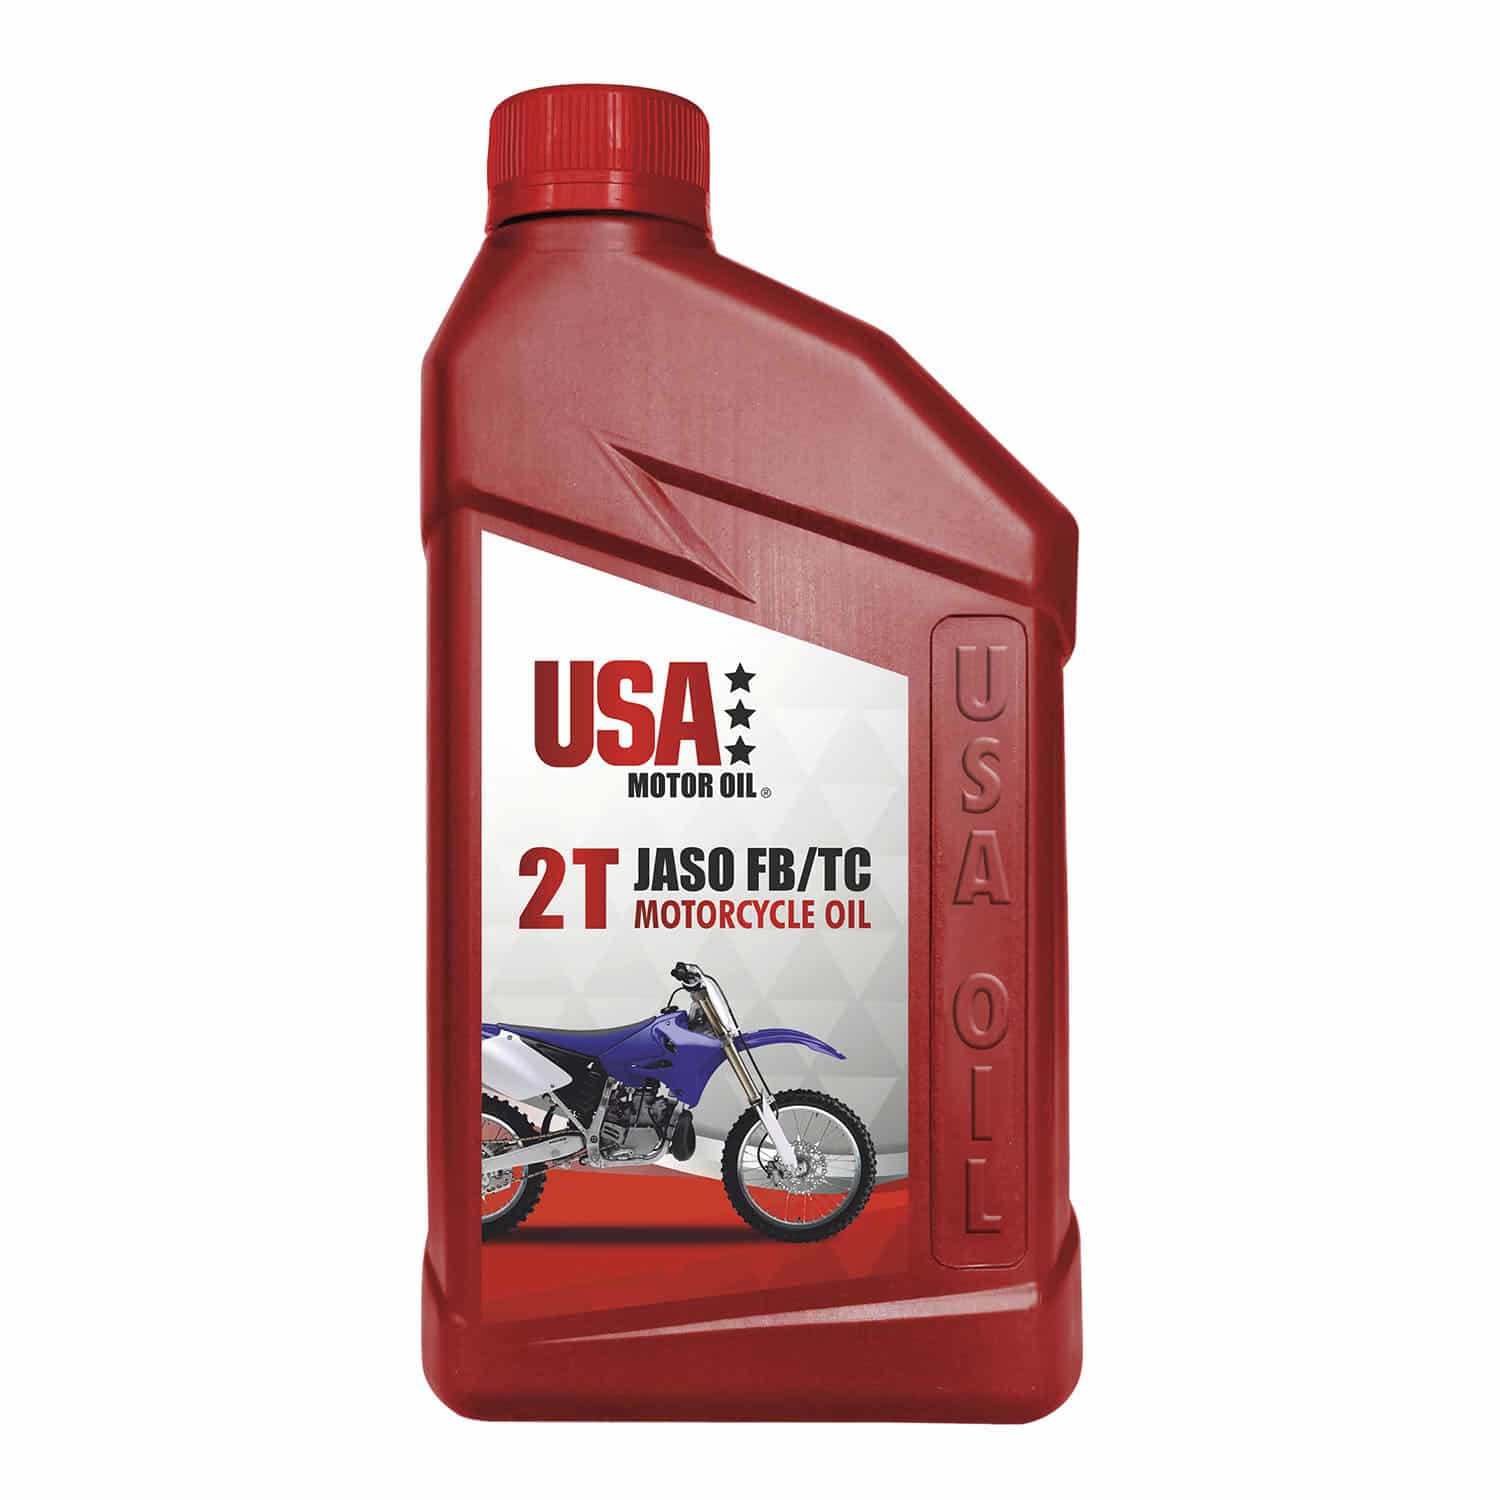 MOTORCYCLE SPORT OIL 2T FB/TC – Usa Motor Oil